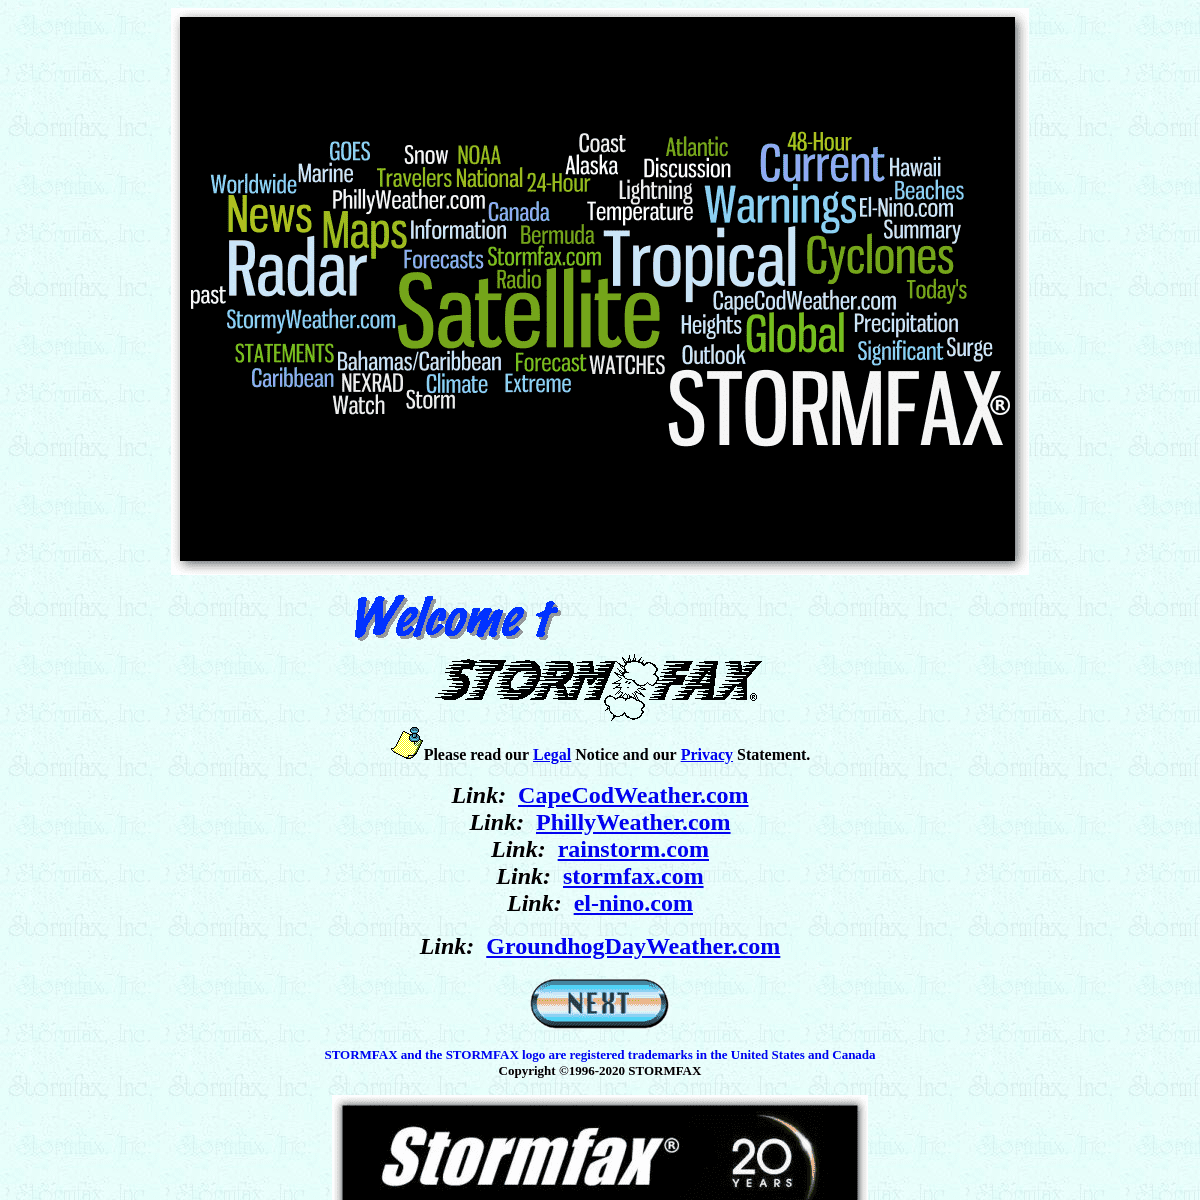 A complete backup of stormfax.com